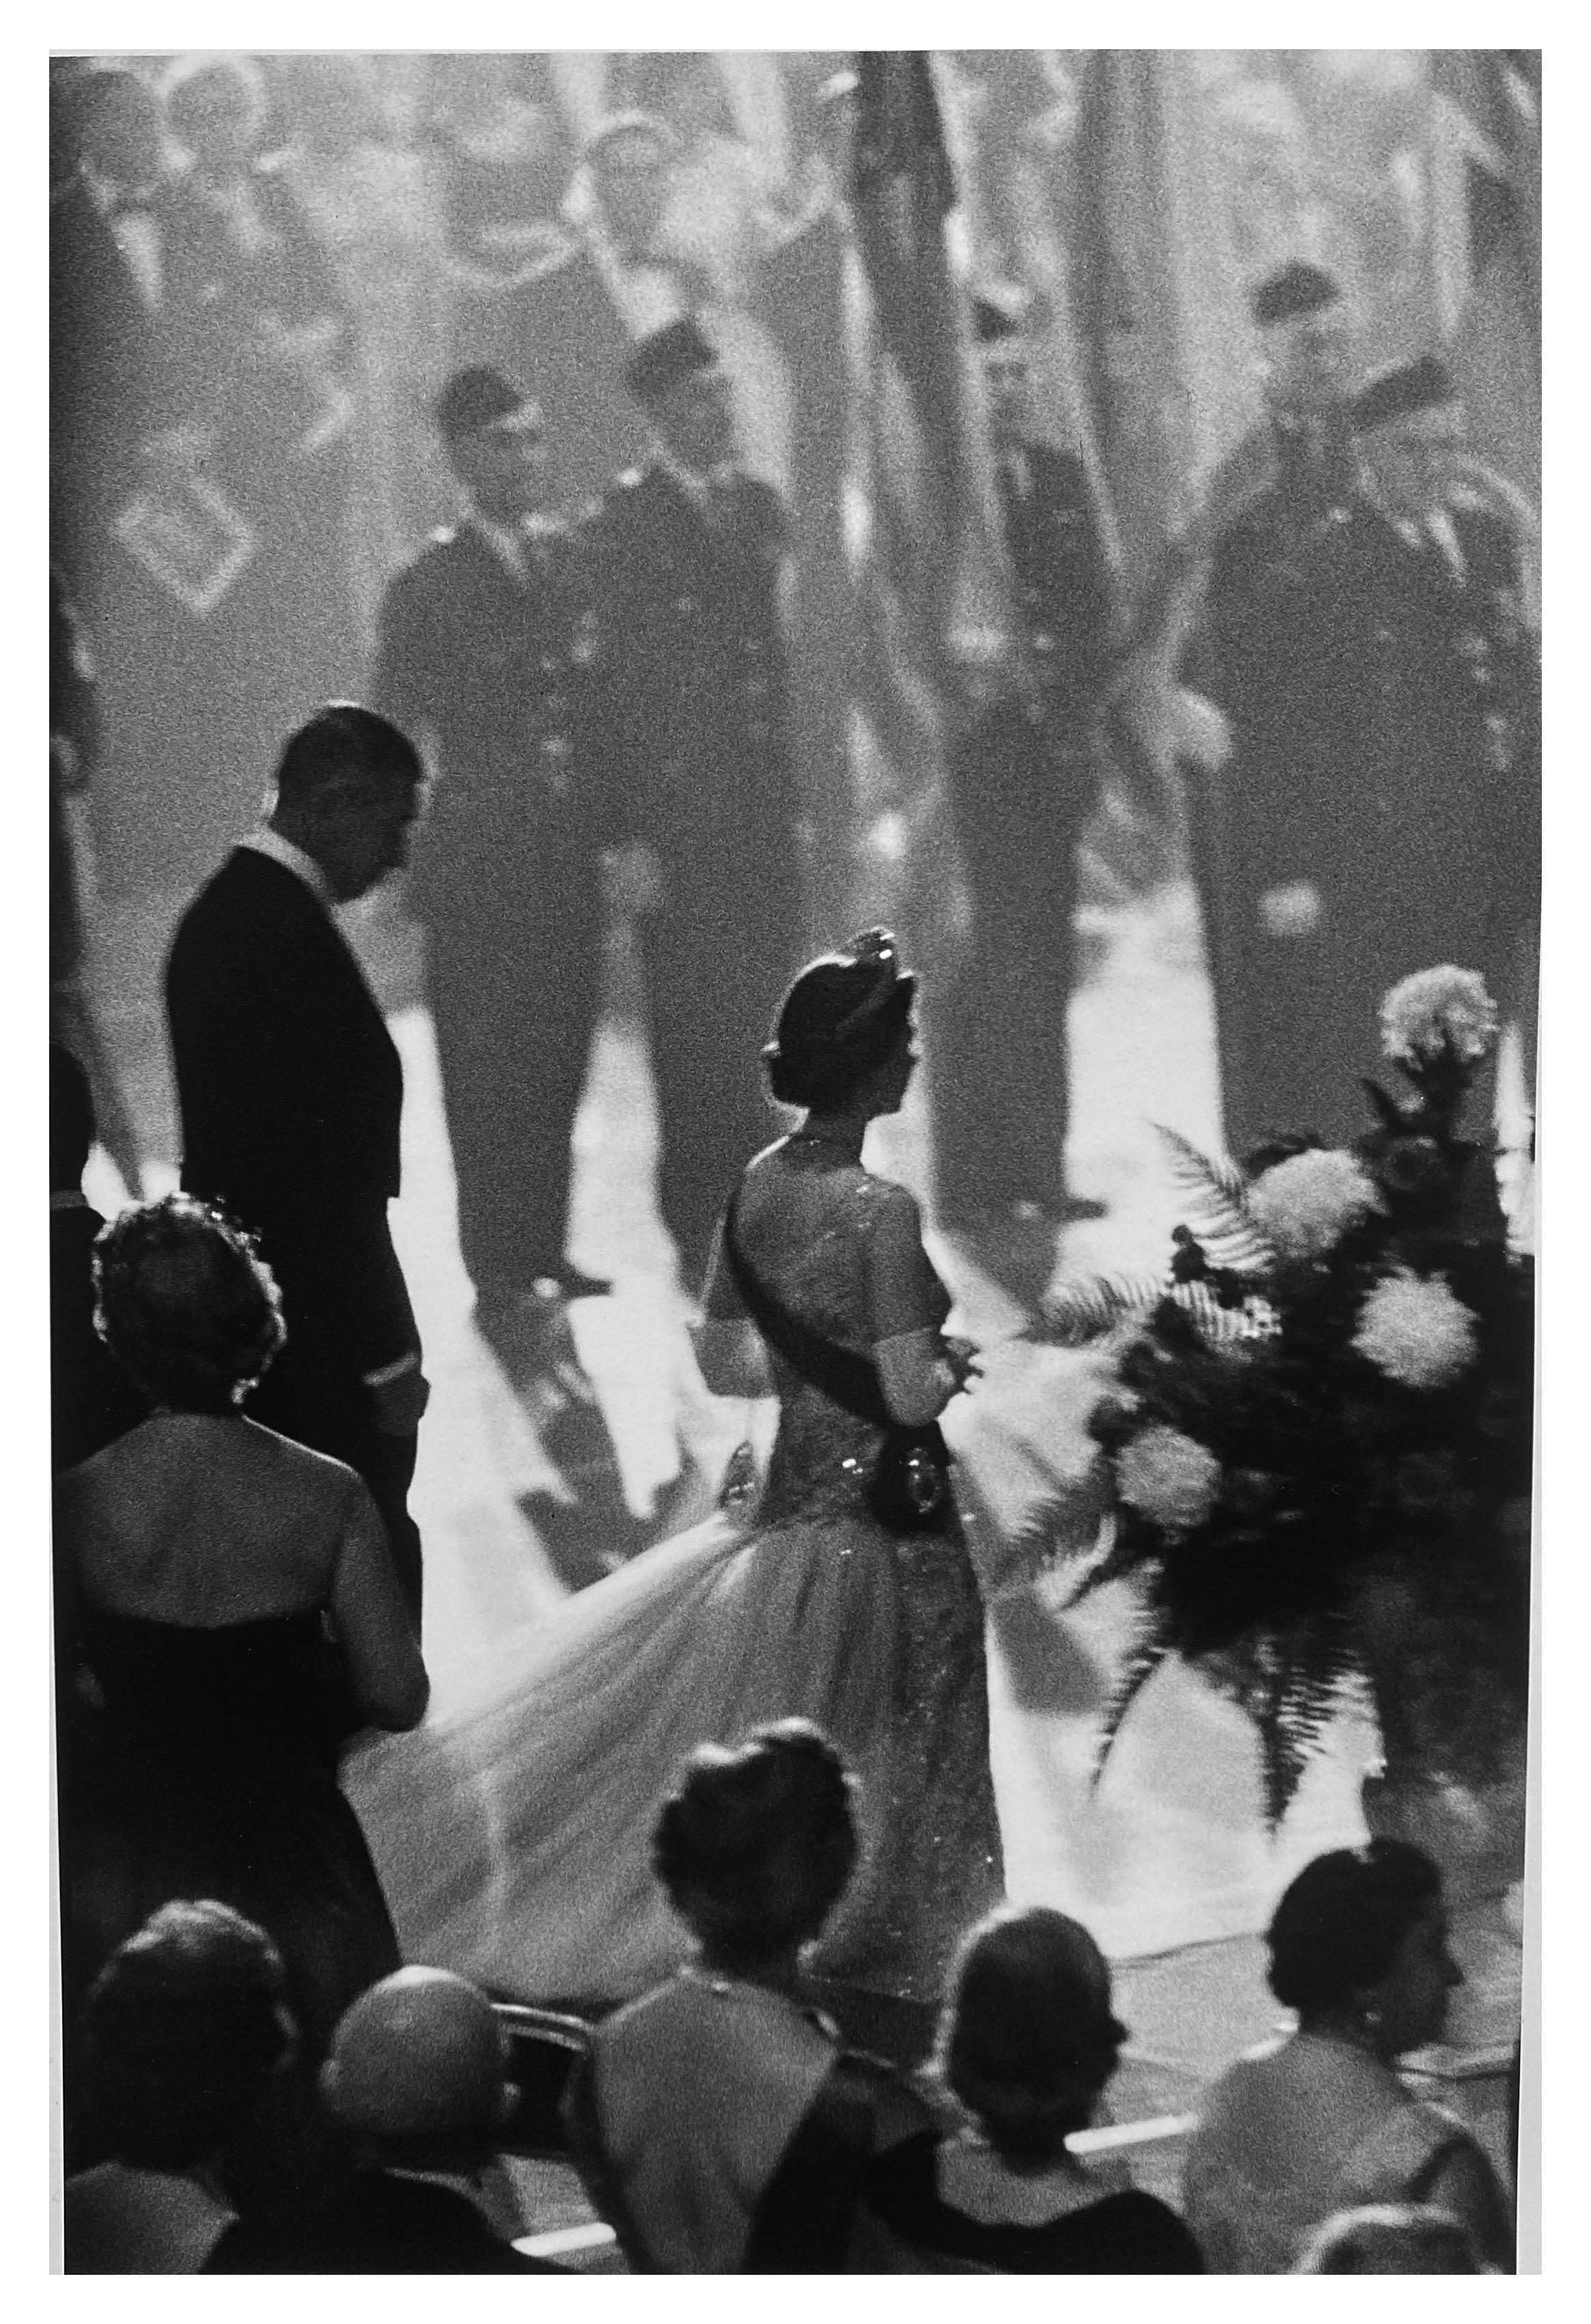 Queen Elizabeth II Visit to America, New York City 1950s, Gelatin Silver Print - Photograph by Burt Glinn